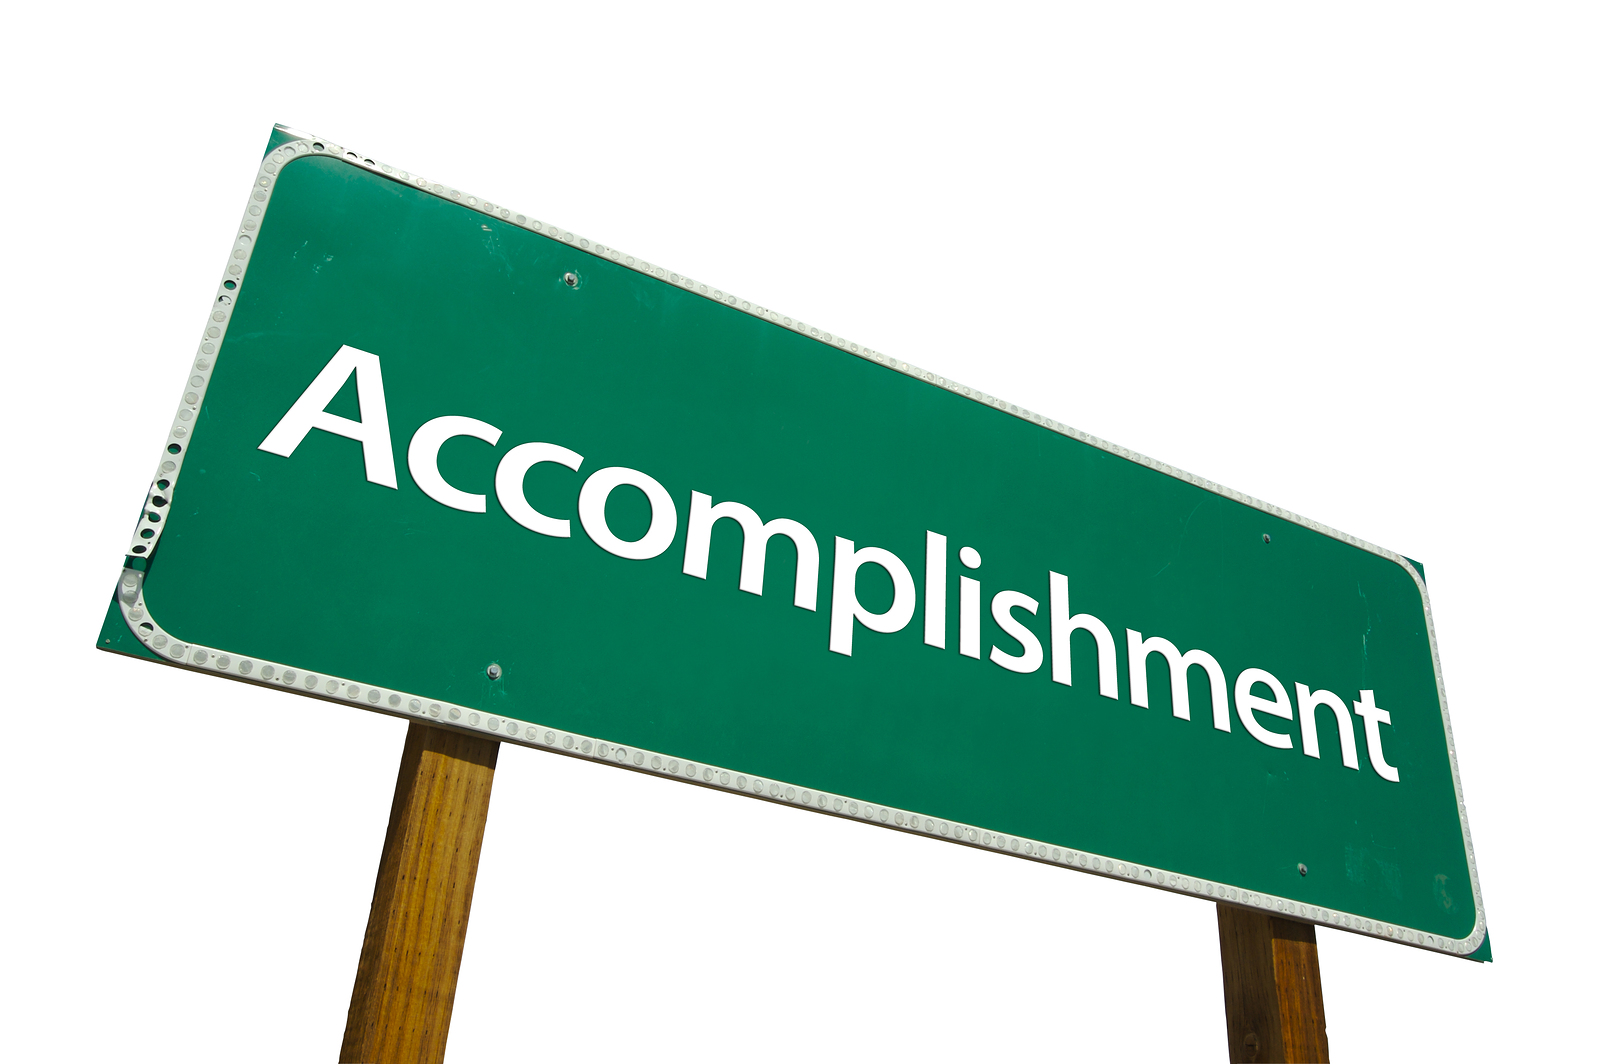 accomplishment pictures